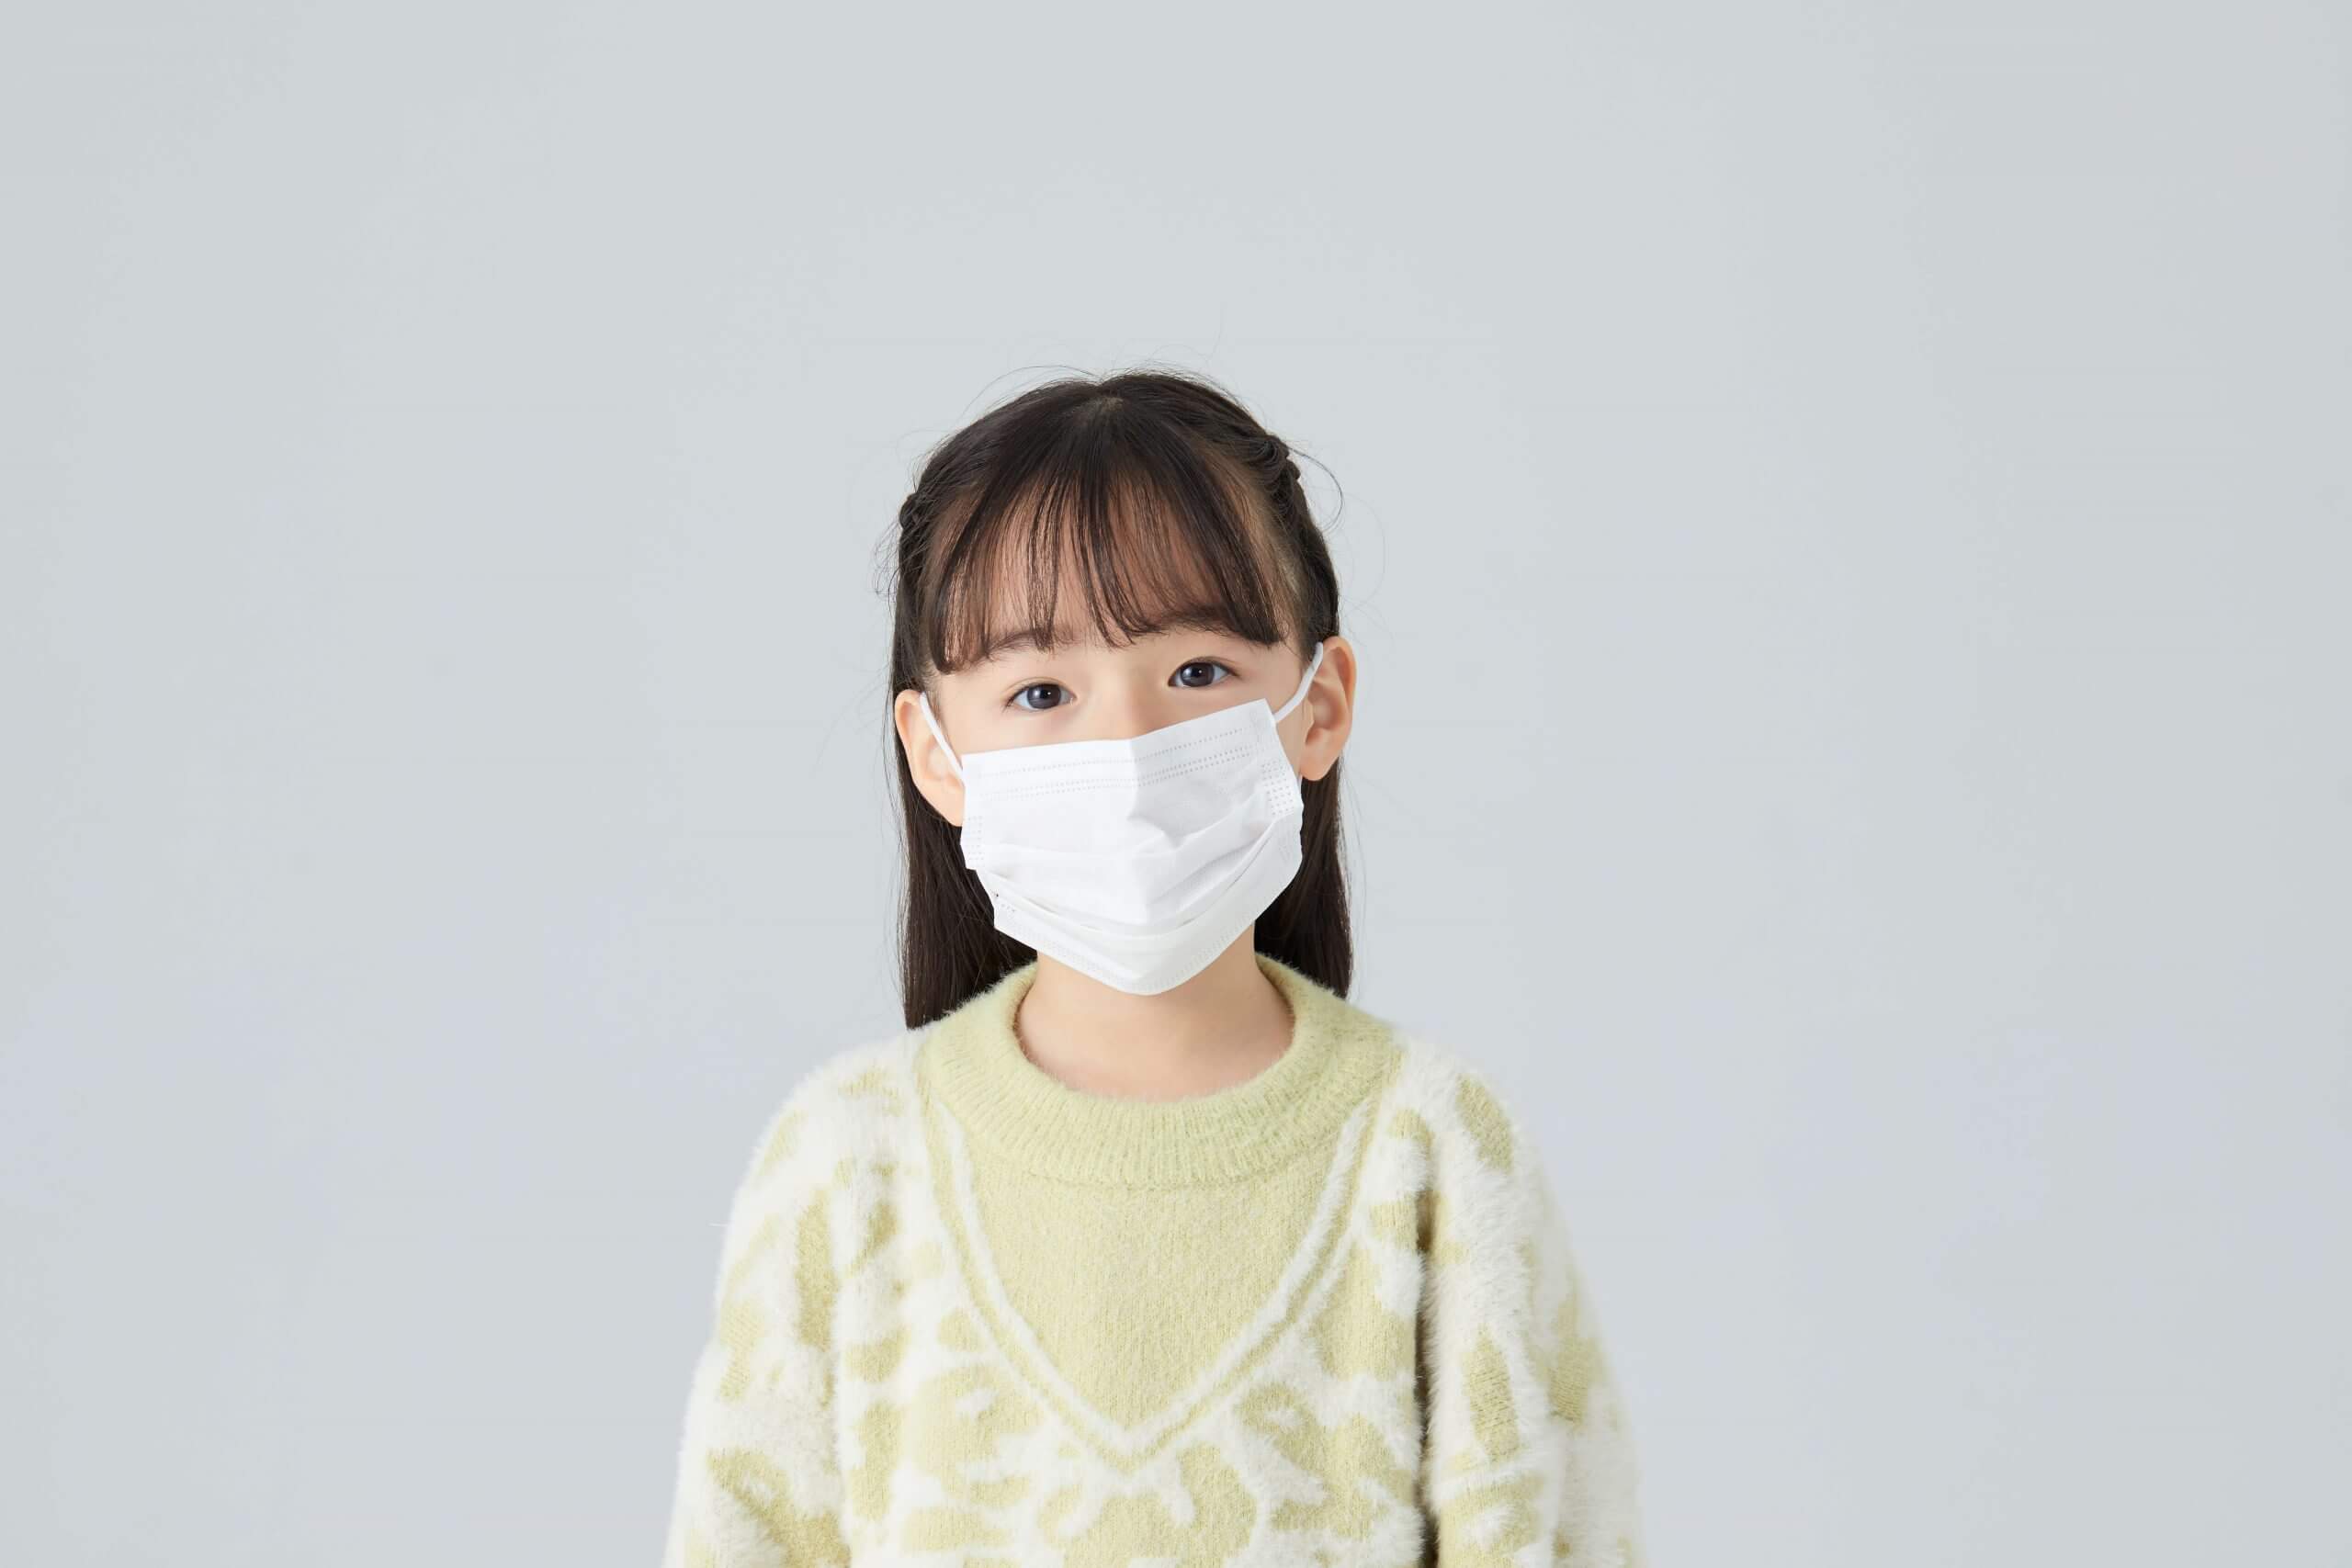 viêm phổi ở trẻ em